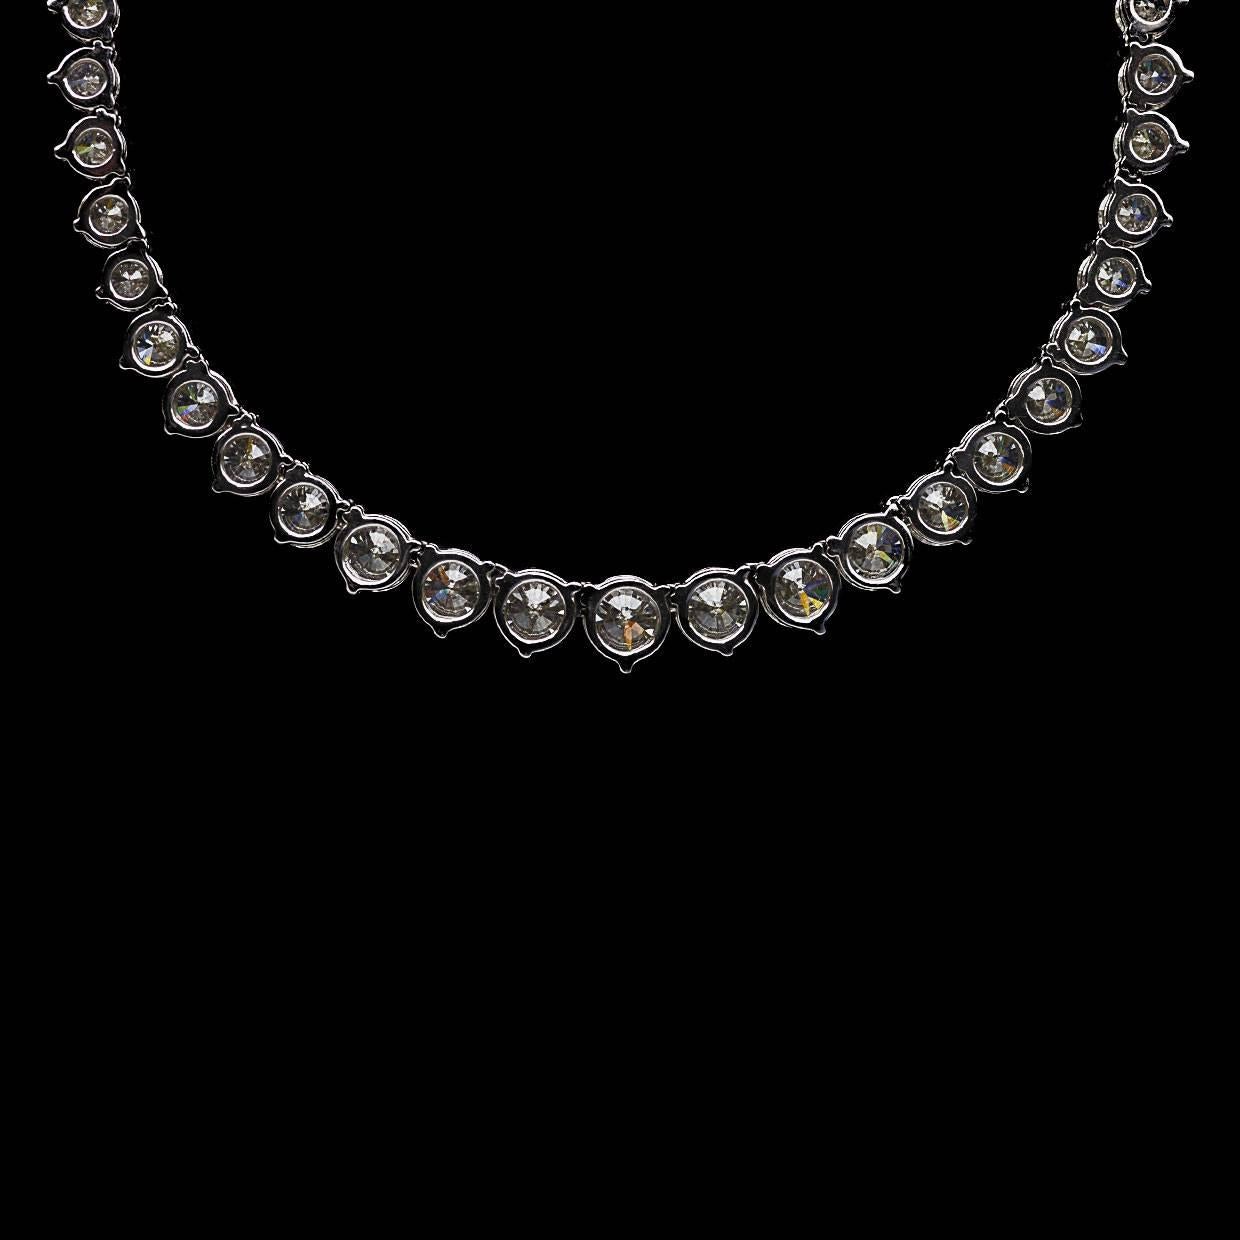 20 carat tennis necklace